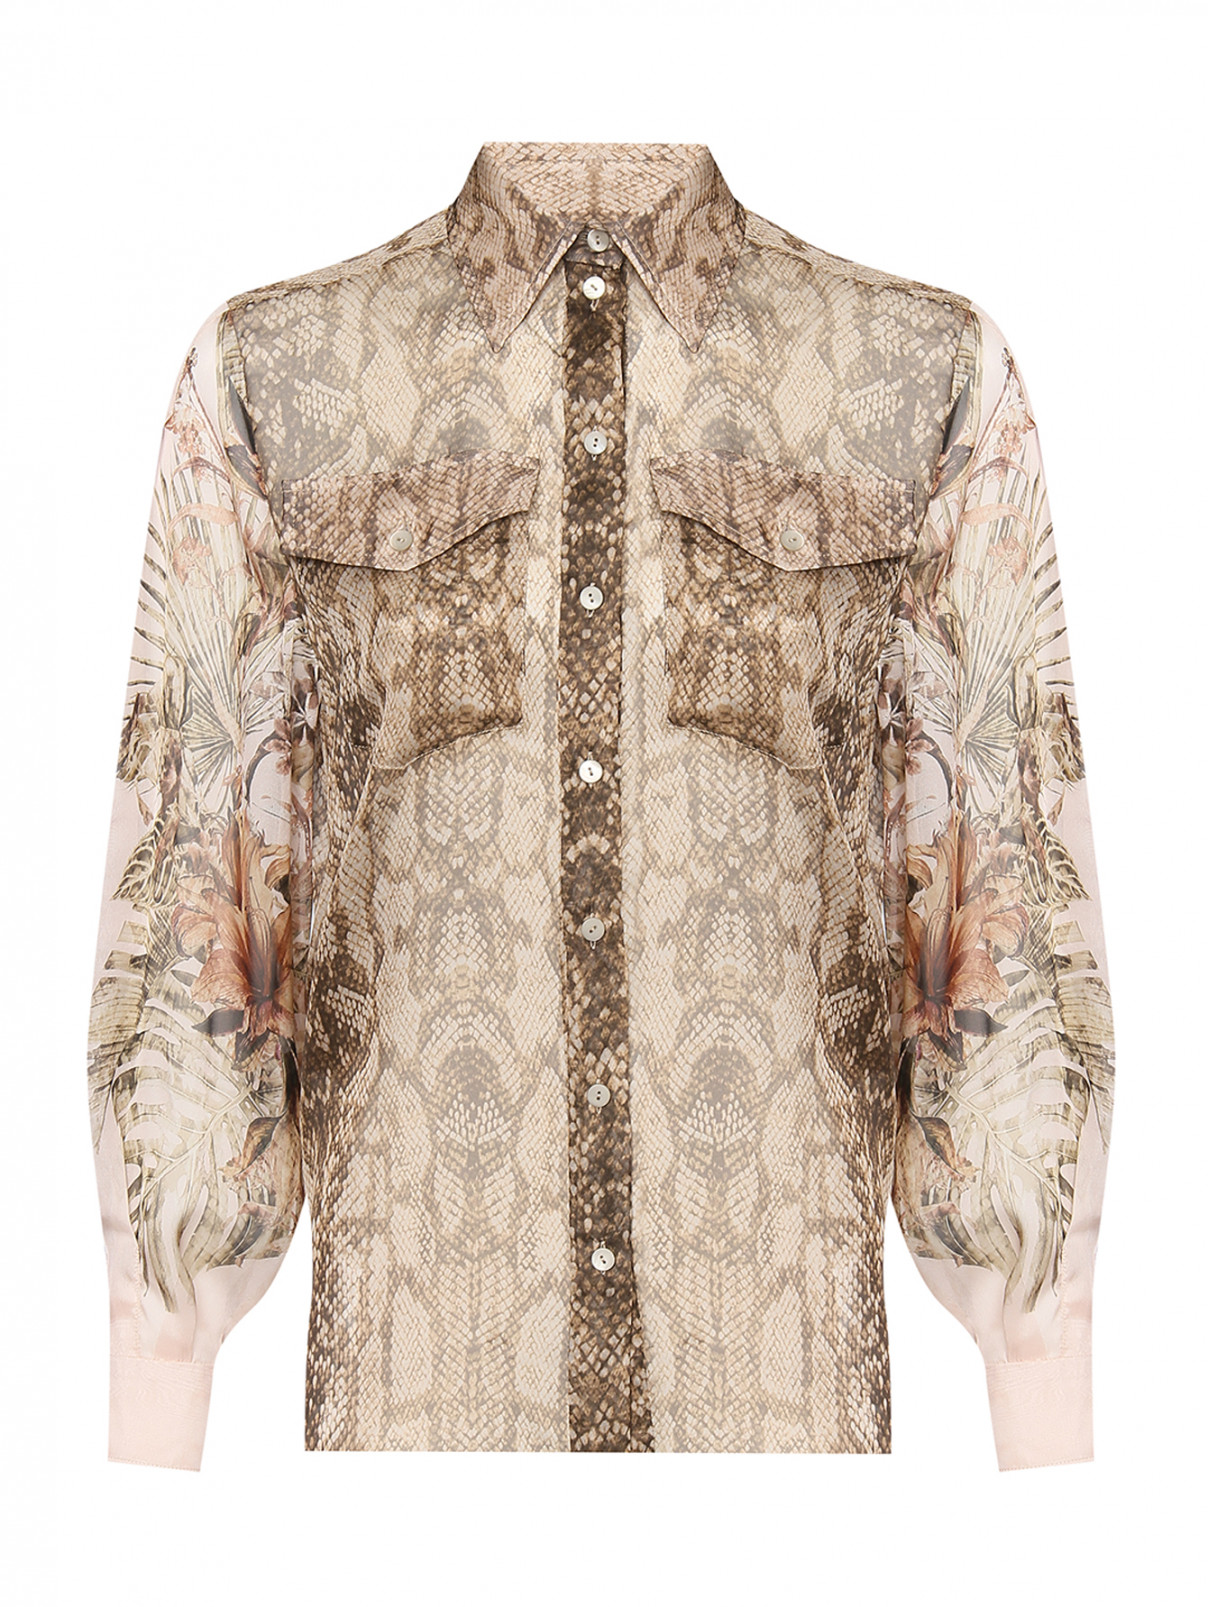 Блуза из шелка с узороом и карманами Alberta Ferretti  –  Общий вид  – Цвет:  Узор